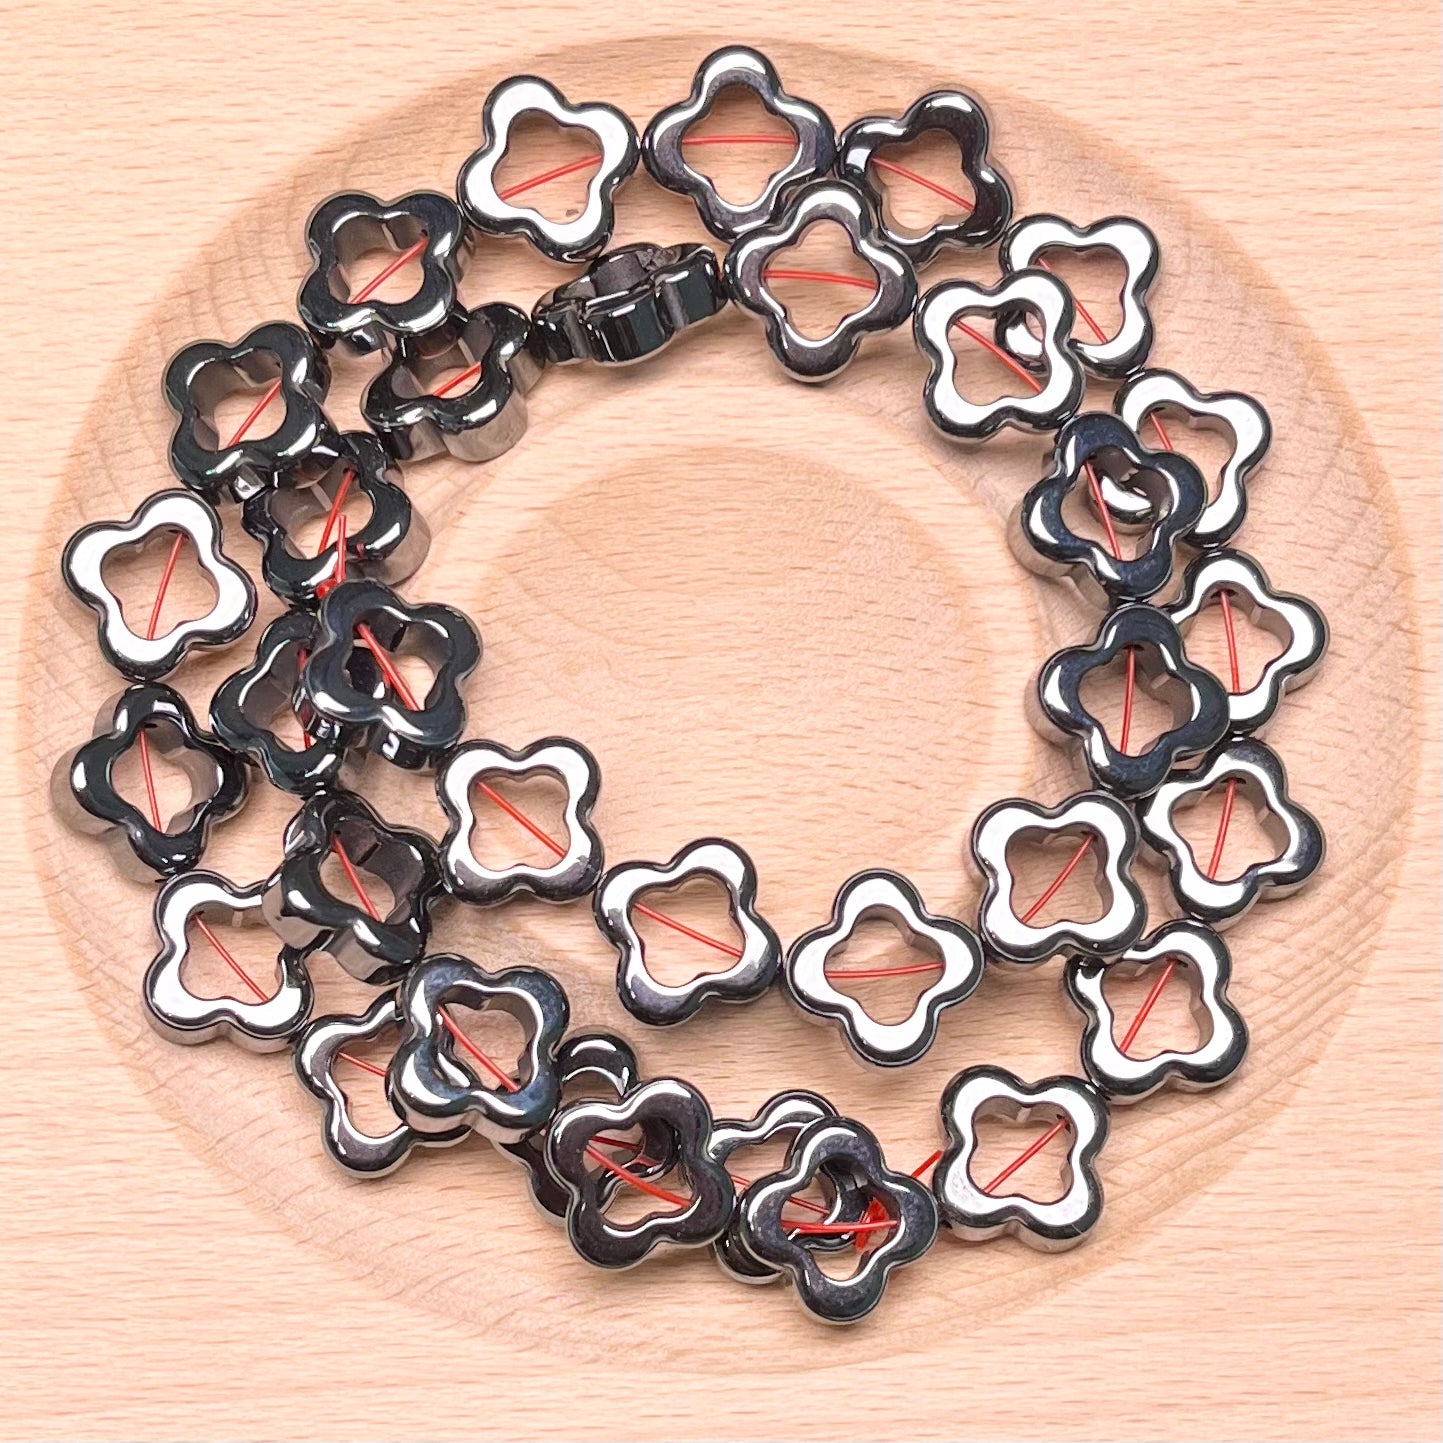 Hematite 4mm beads frame strand